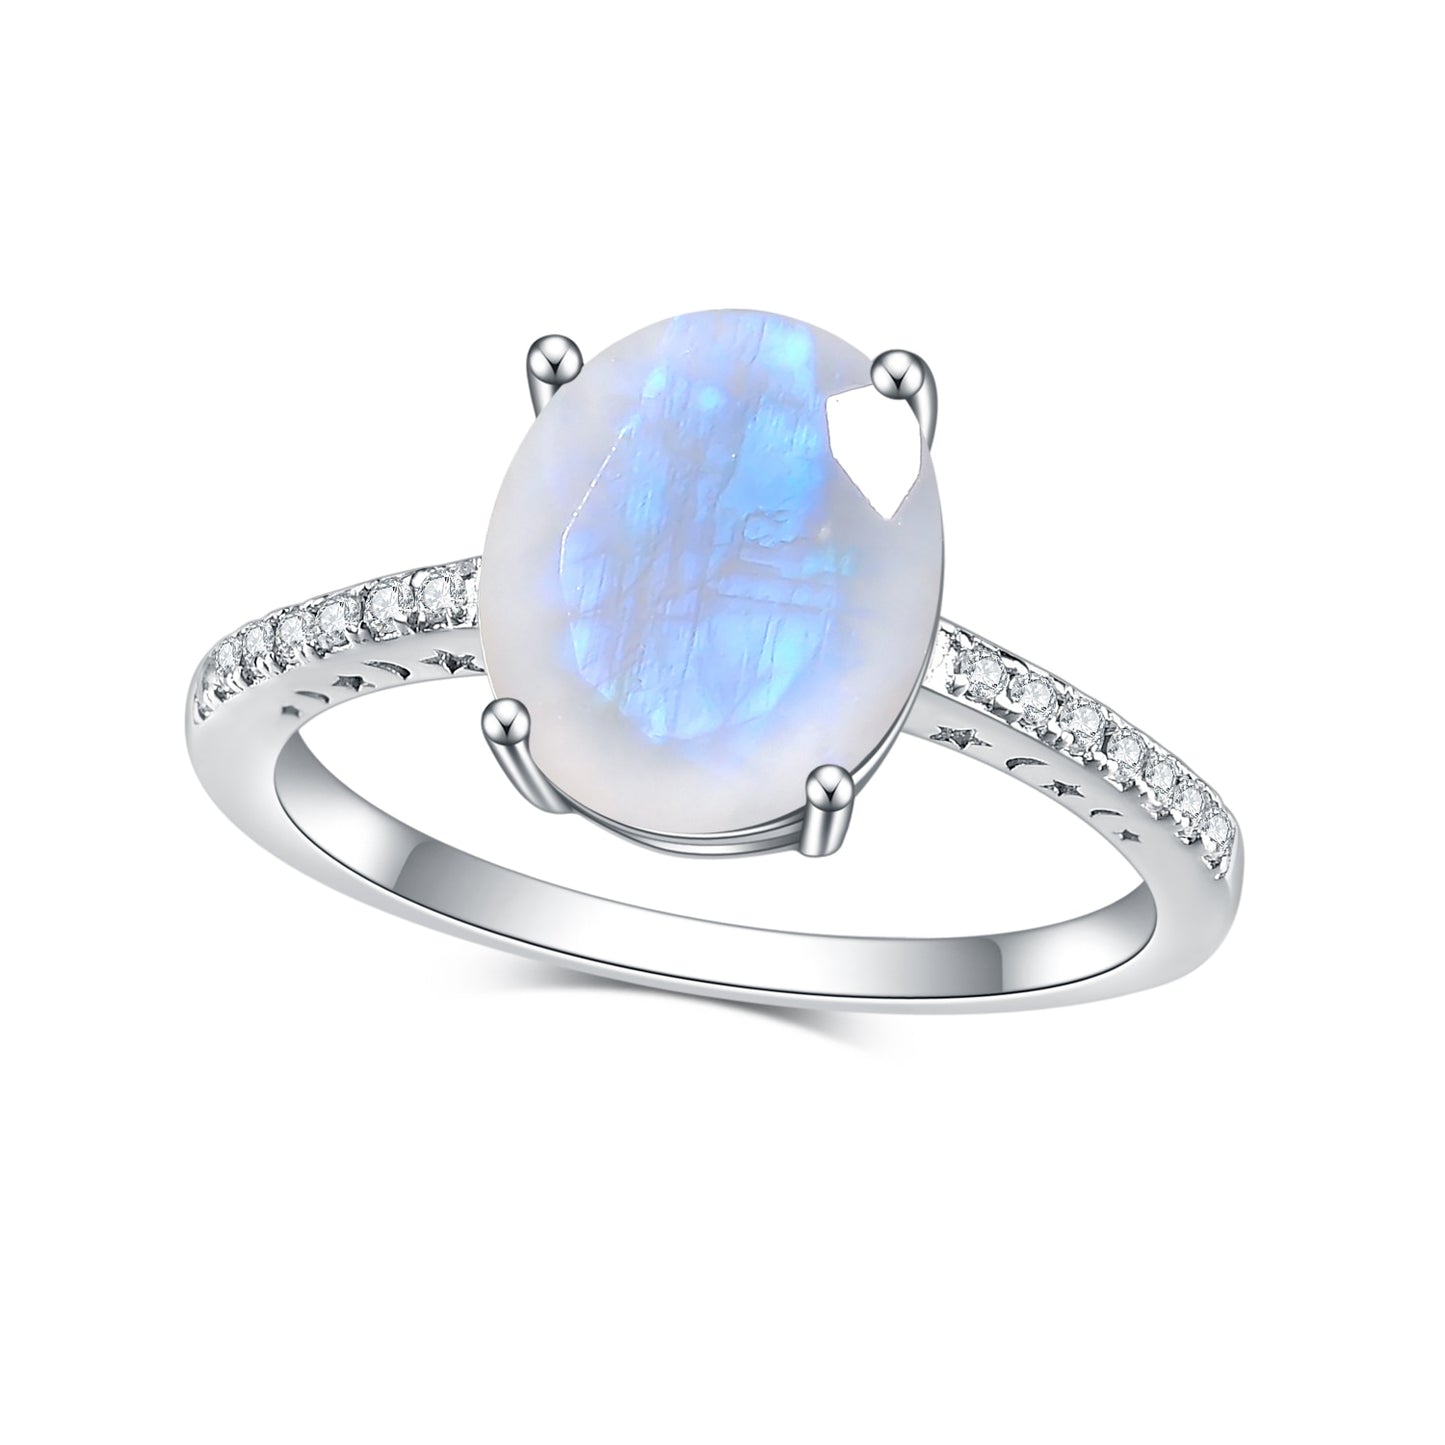 GEM'S BALLET 8X10mm Vintage Milky Blue Moonstone Engagement Ring Promise Bridal Ring in 925 Sterling Silver Gift For Her Milky Blue Moonstone|925 Sterling Silve